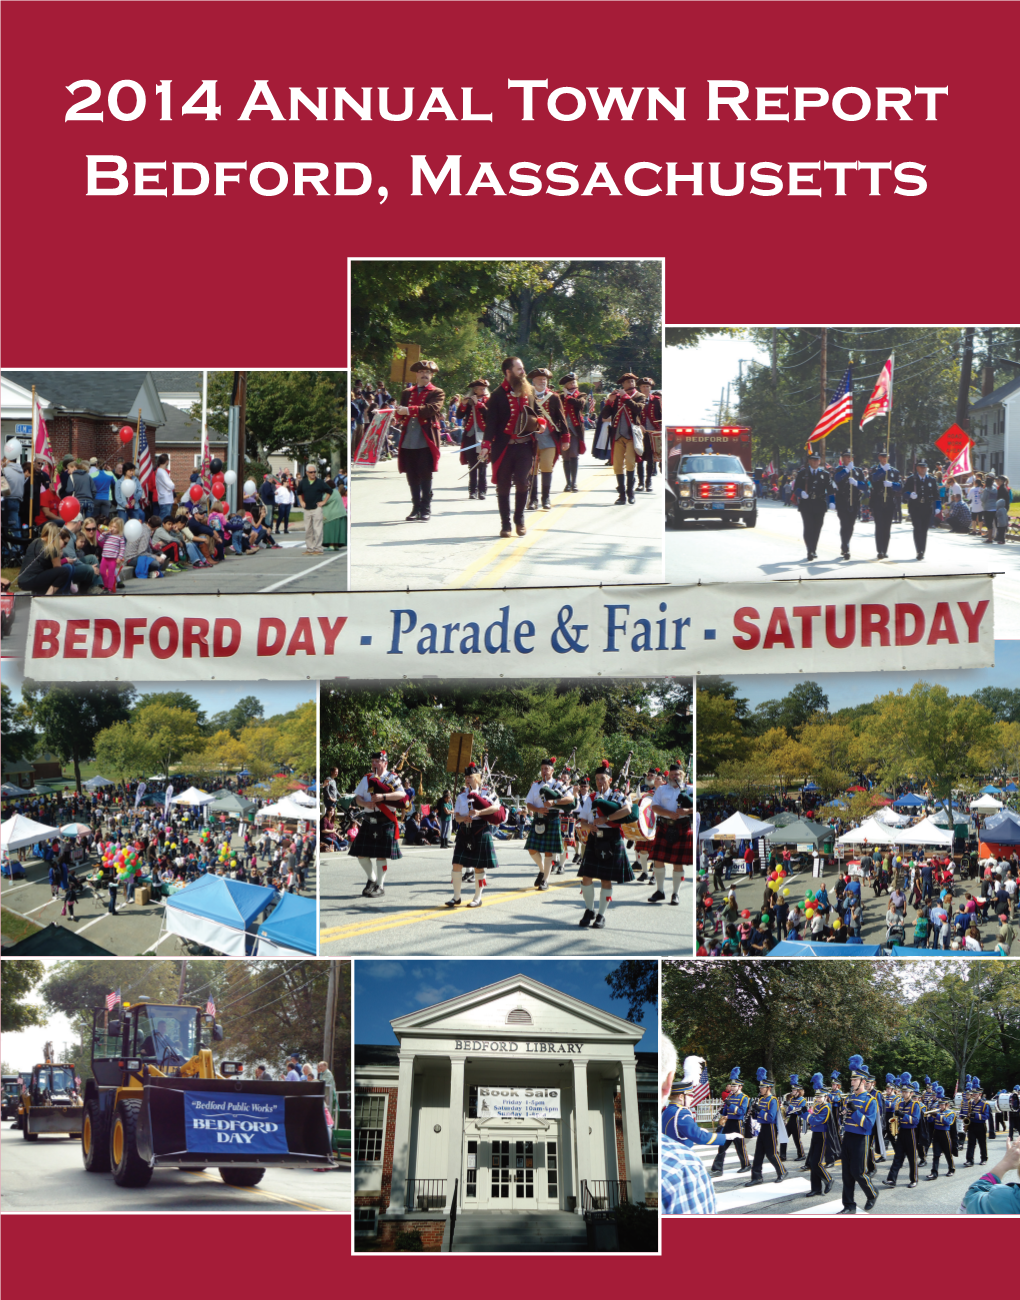 2014 Annual Town Report Bedford, Massachusetts 2014 Annual Town Report Bedford, Massachusetts